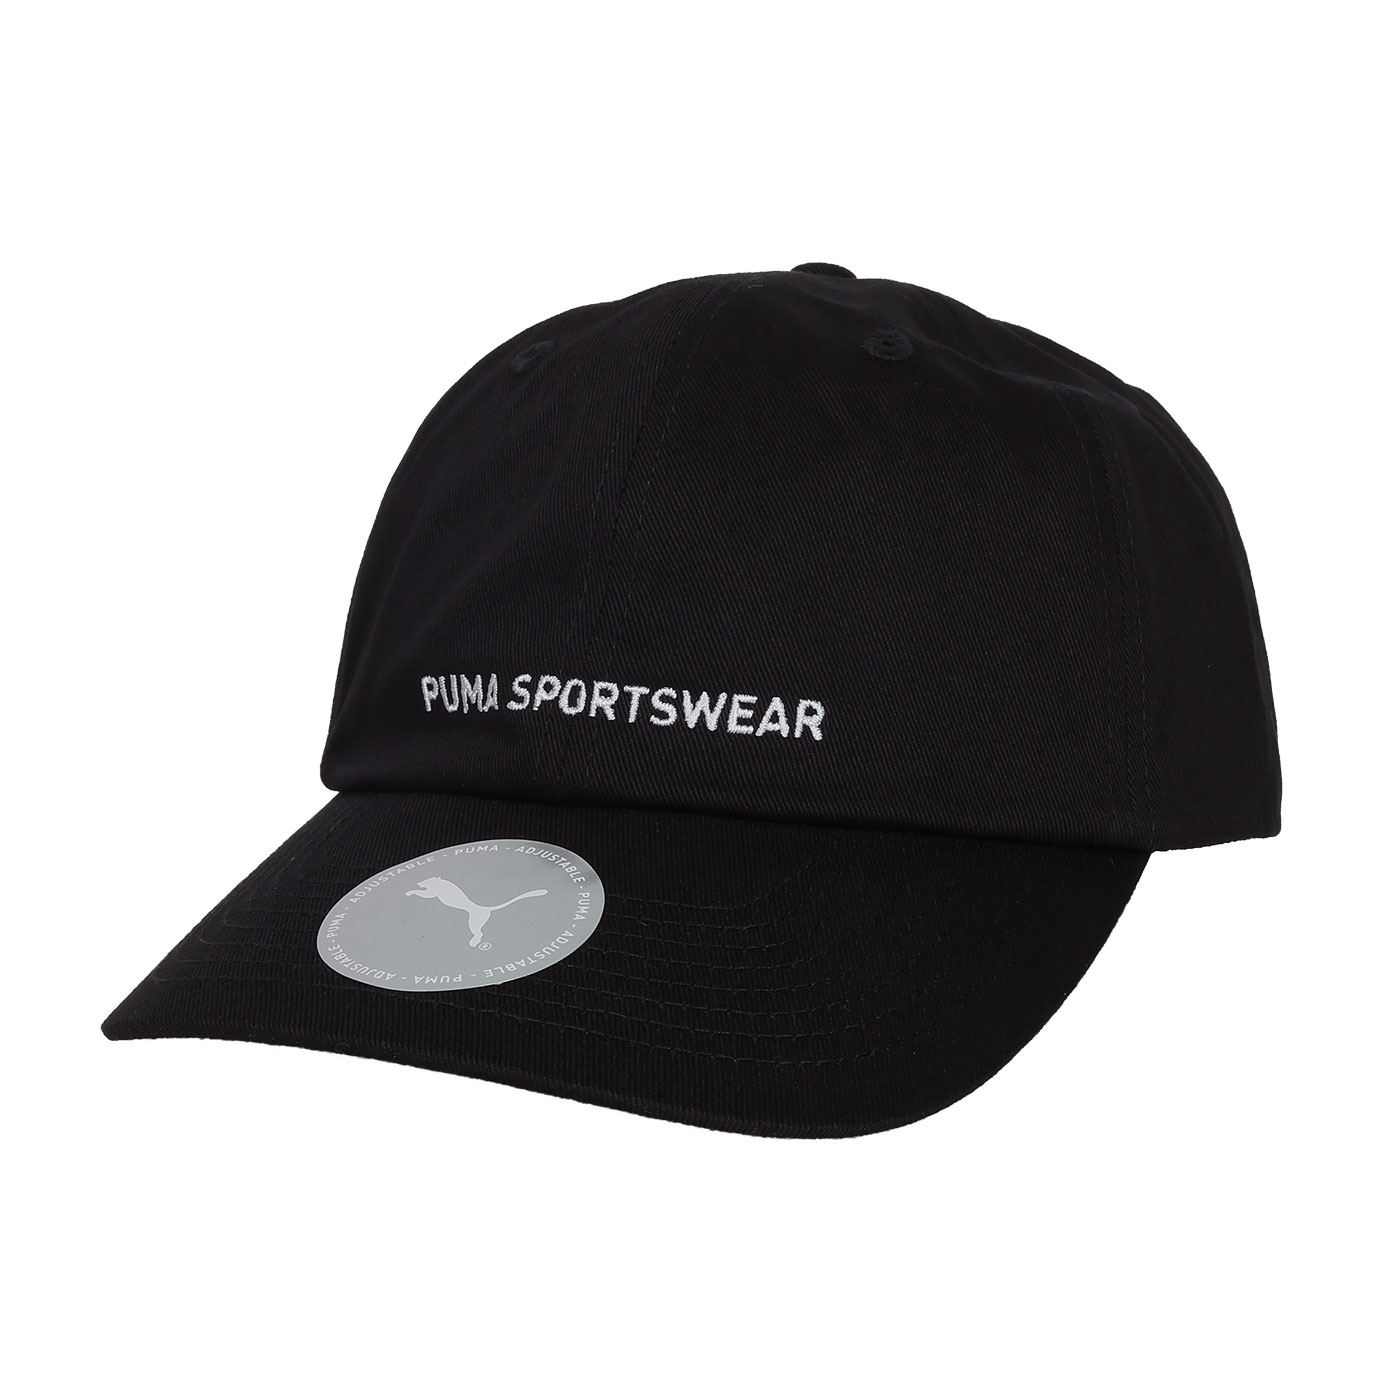 PUMA 基本系列 Sportswear 棒球帽  02403601